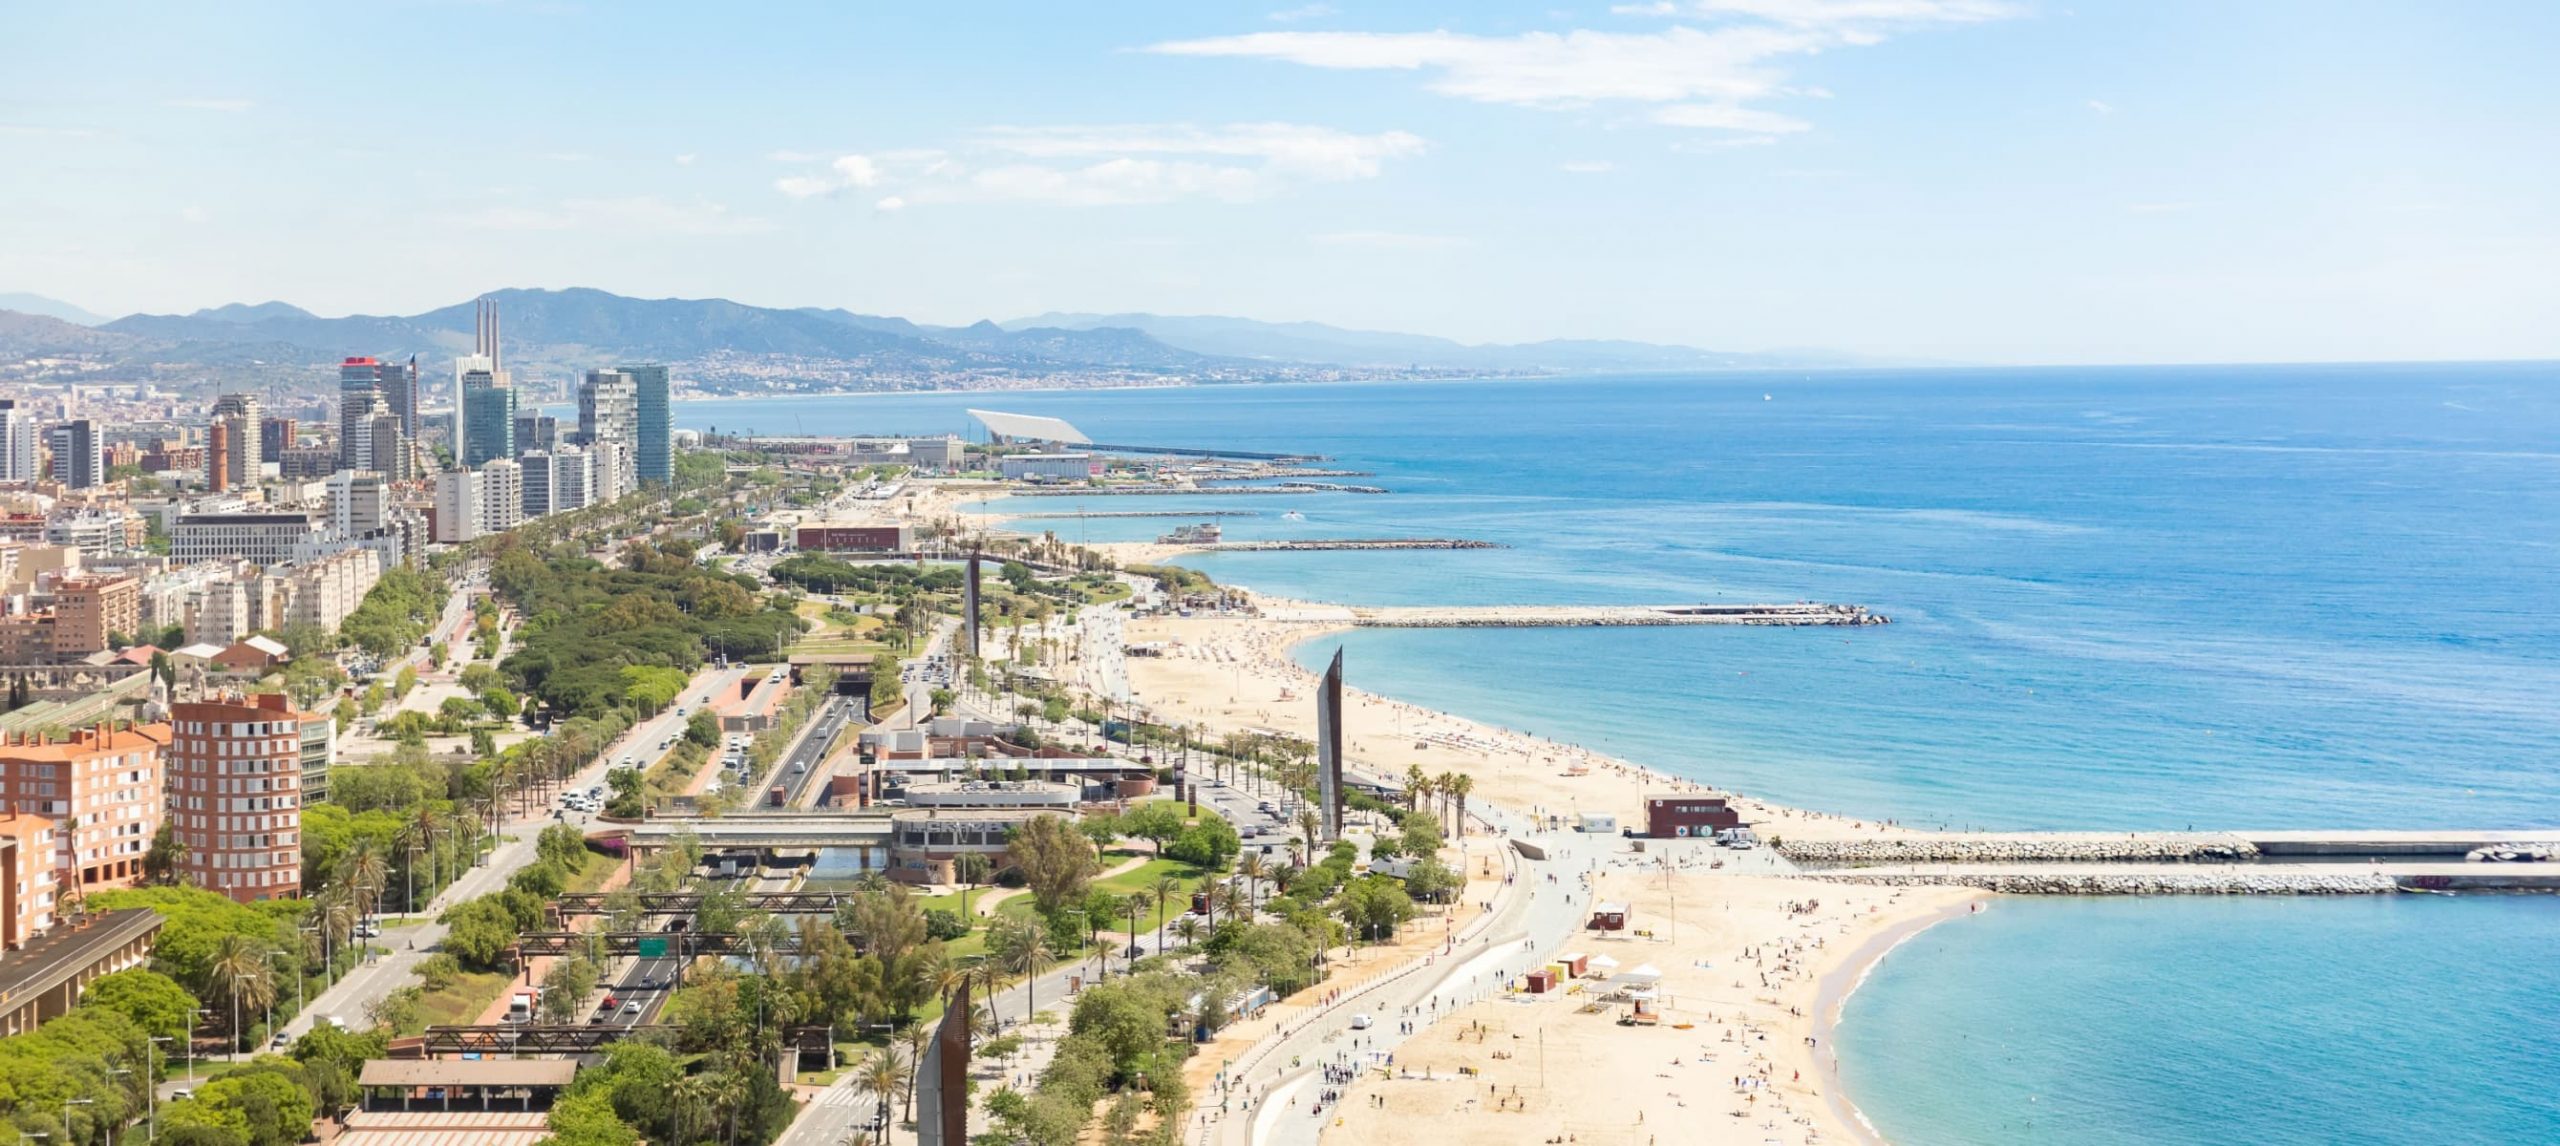 Aerial view of Barcelona's coastline, in Spain.